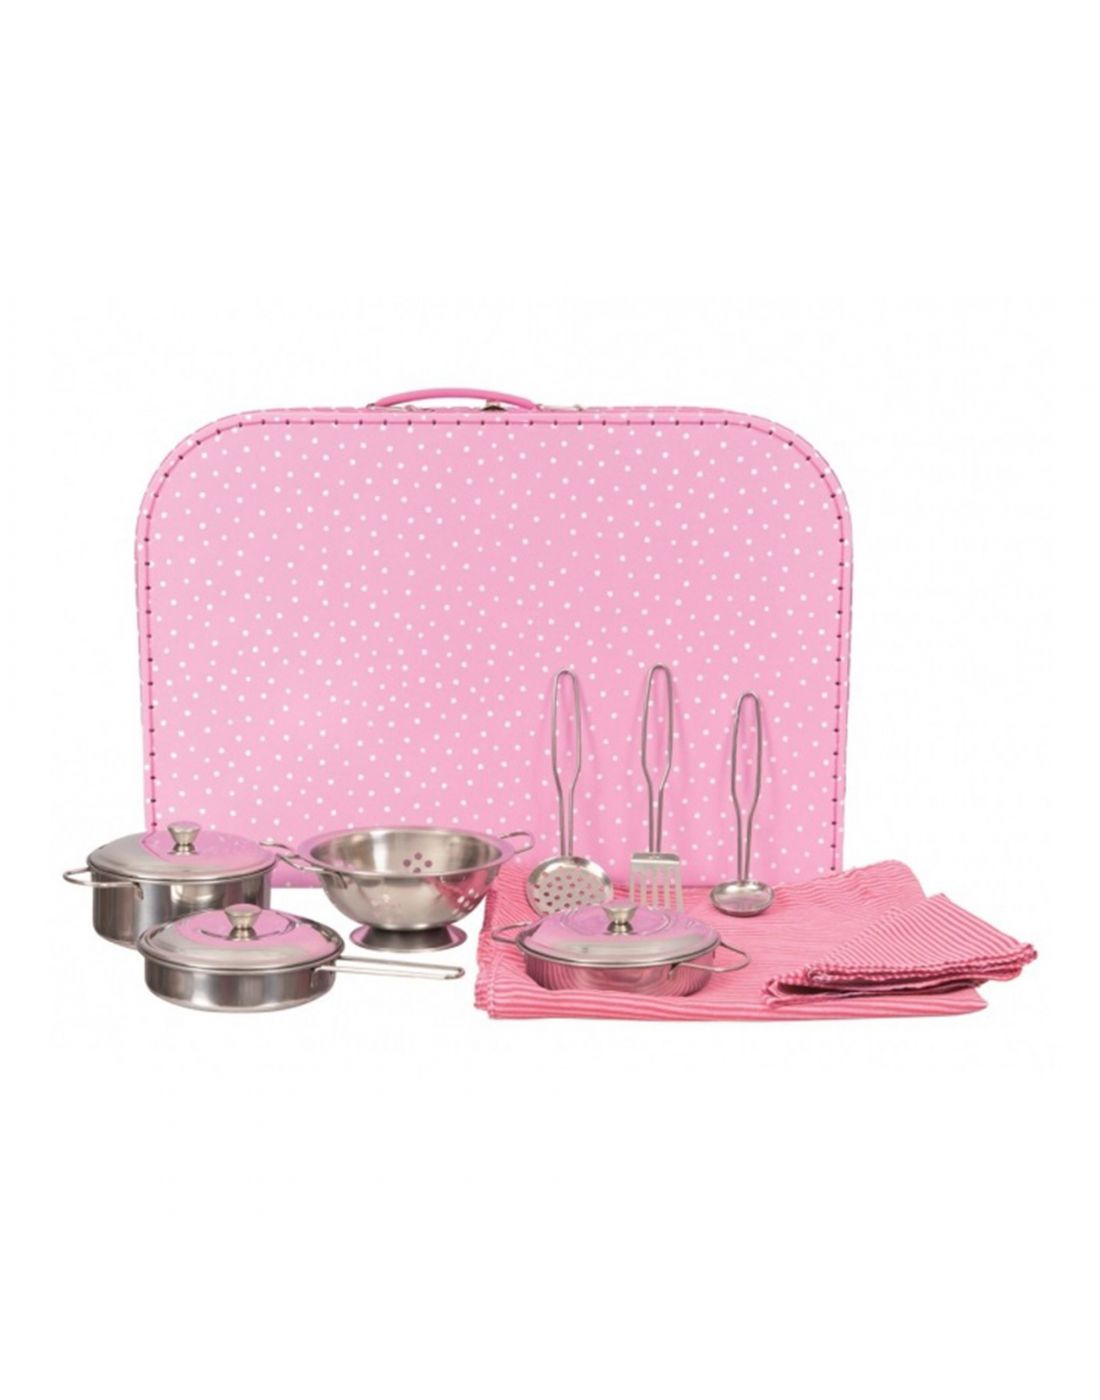 Gaitanaki Cooker set pink case